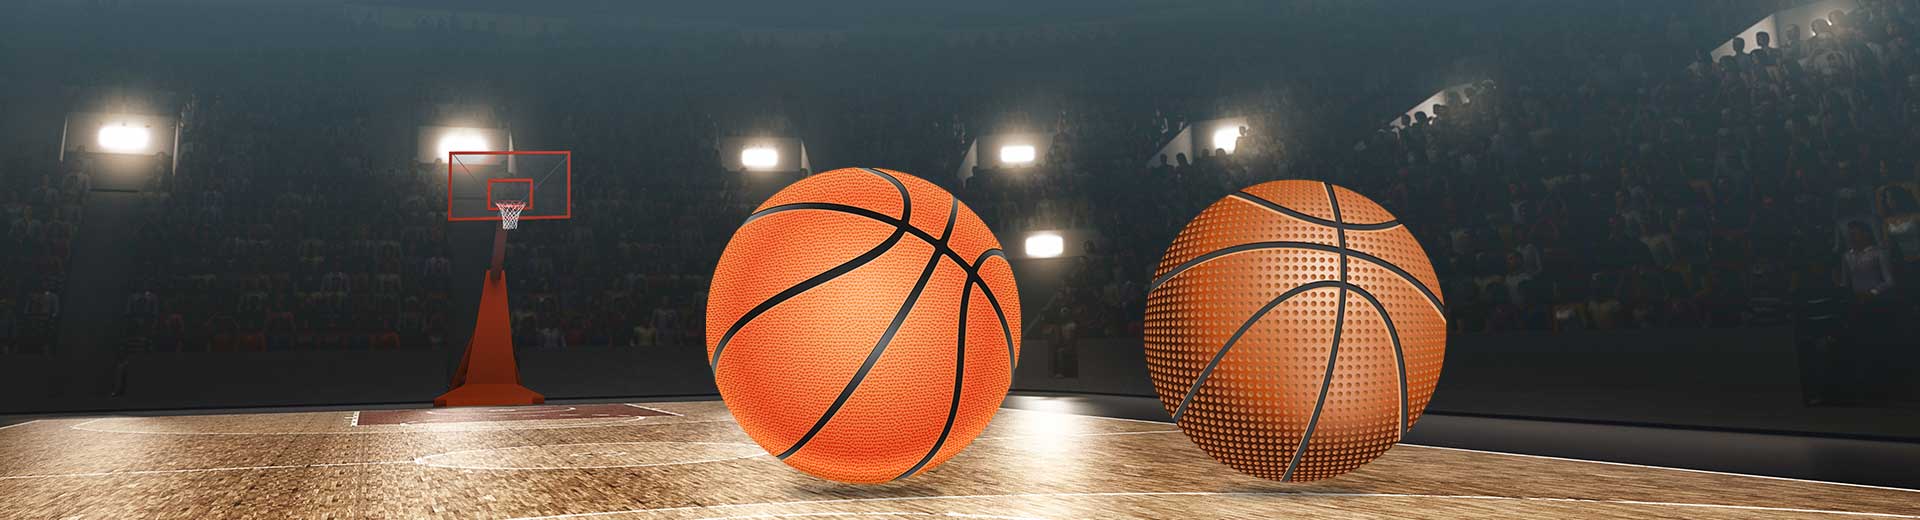 Basketballs Manufacturers in Croatia